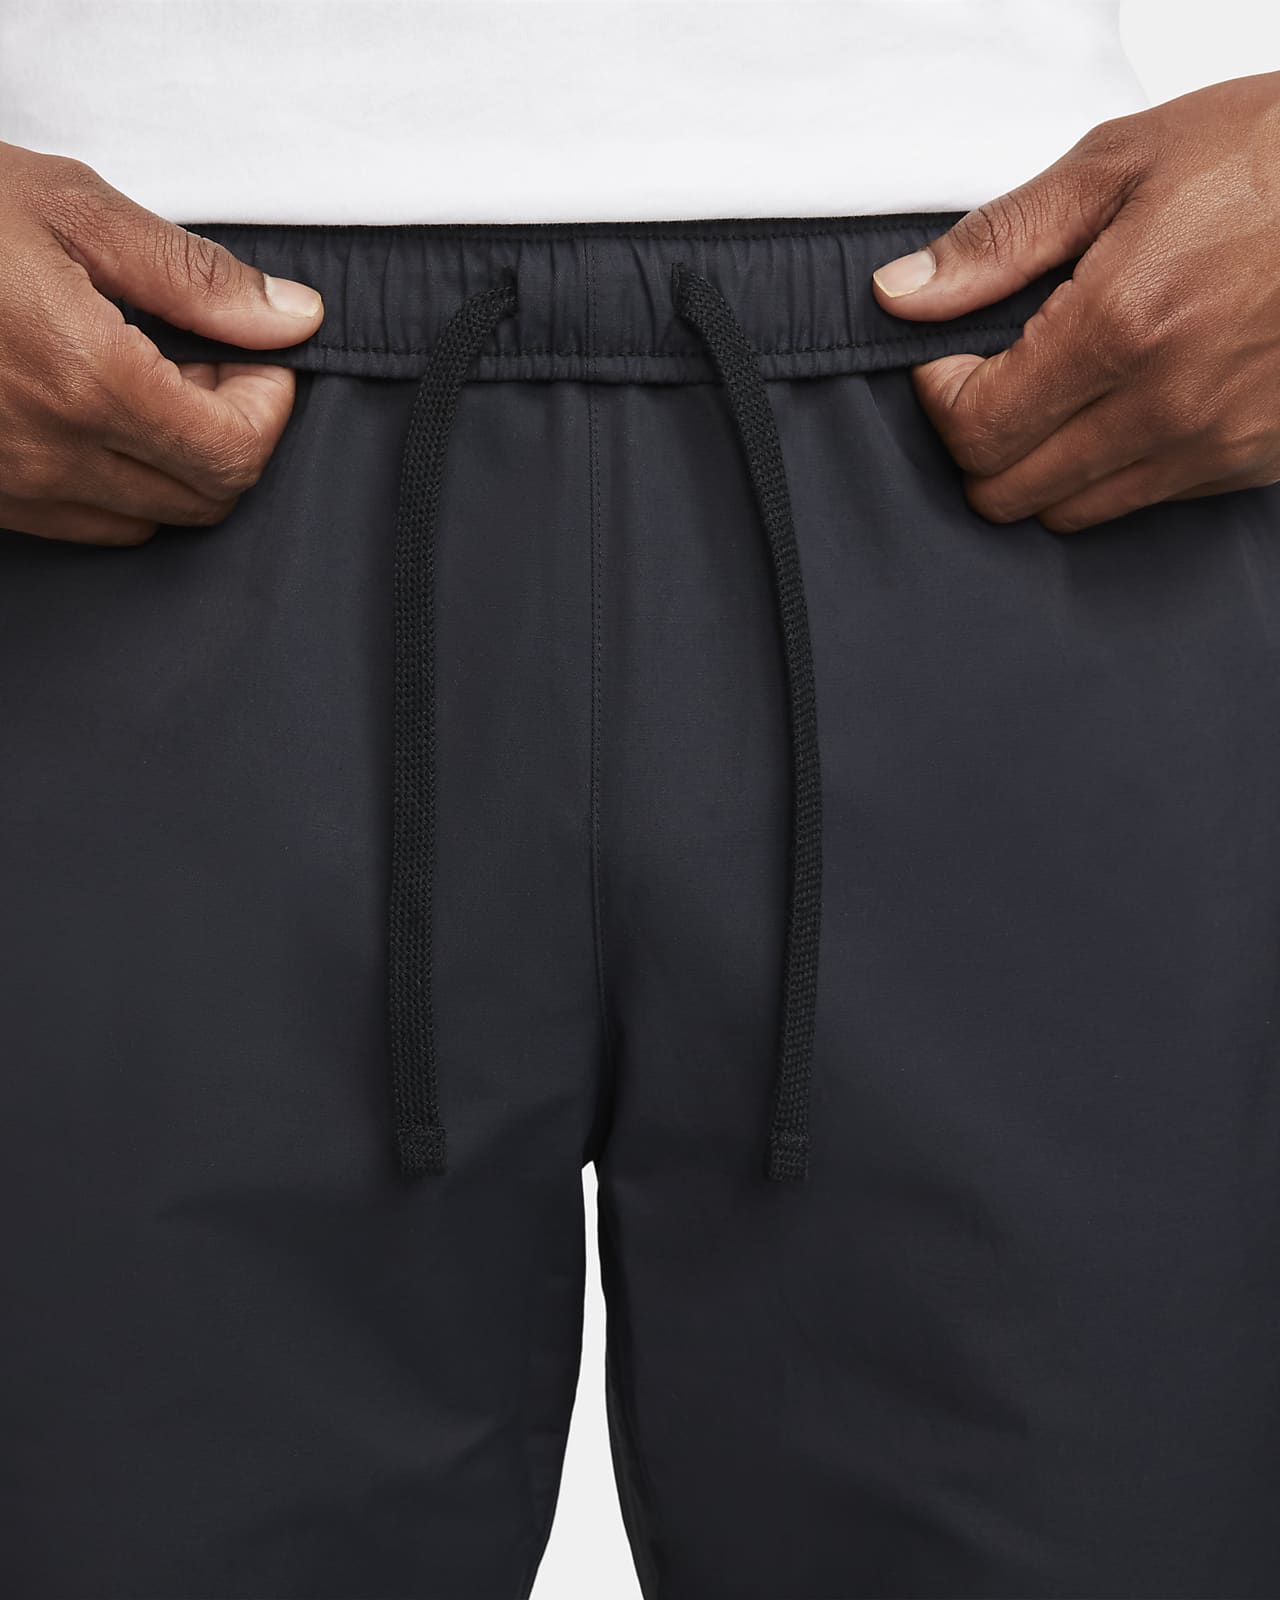 Nike x Acronym Woven Pants Track Pants XL Men's Extra Large [CU0468-100]  NRG